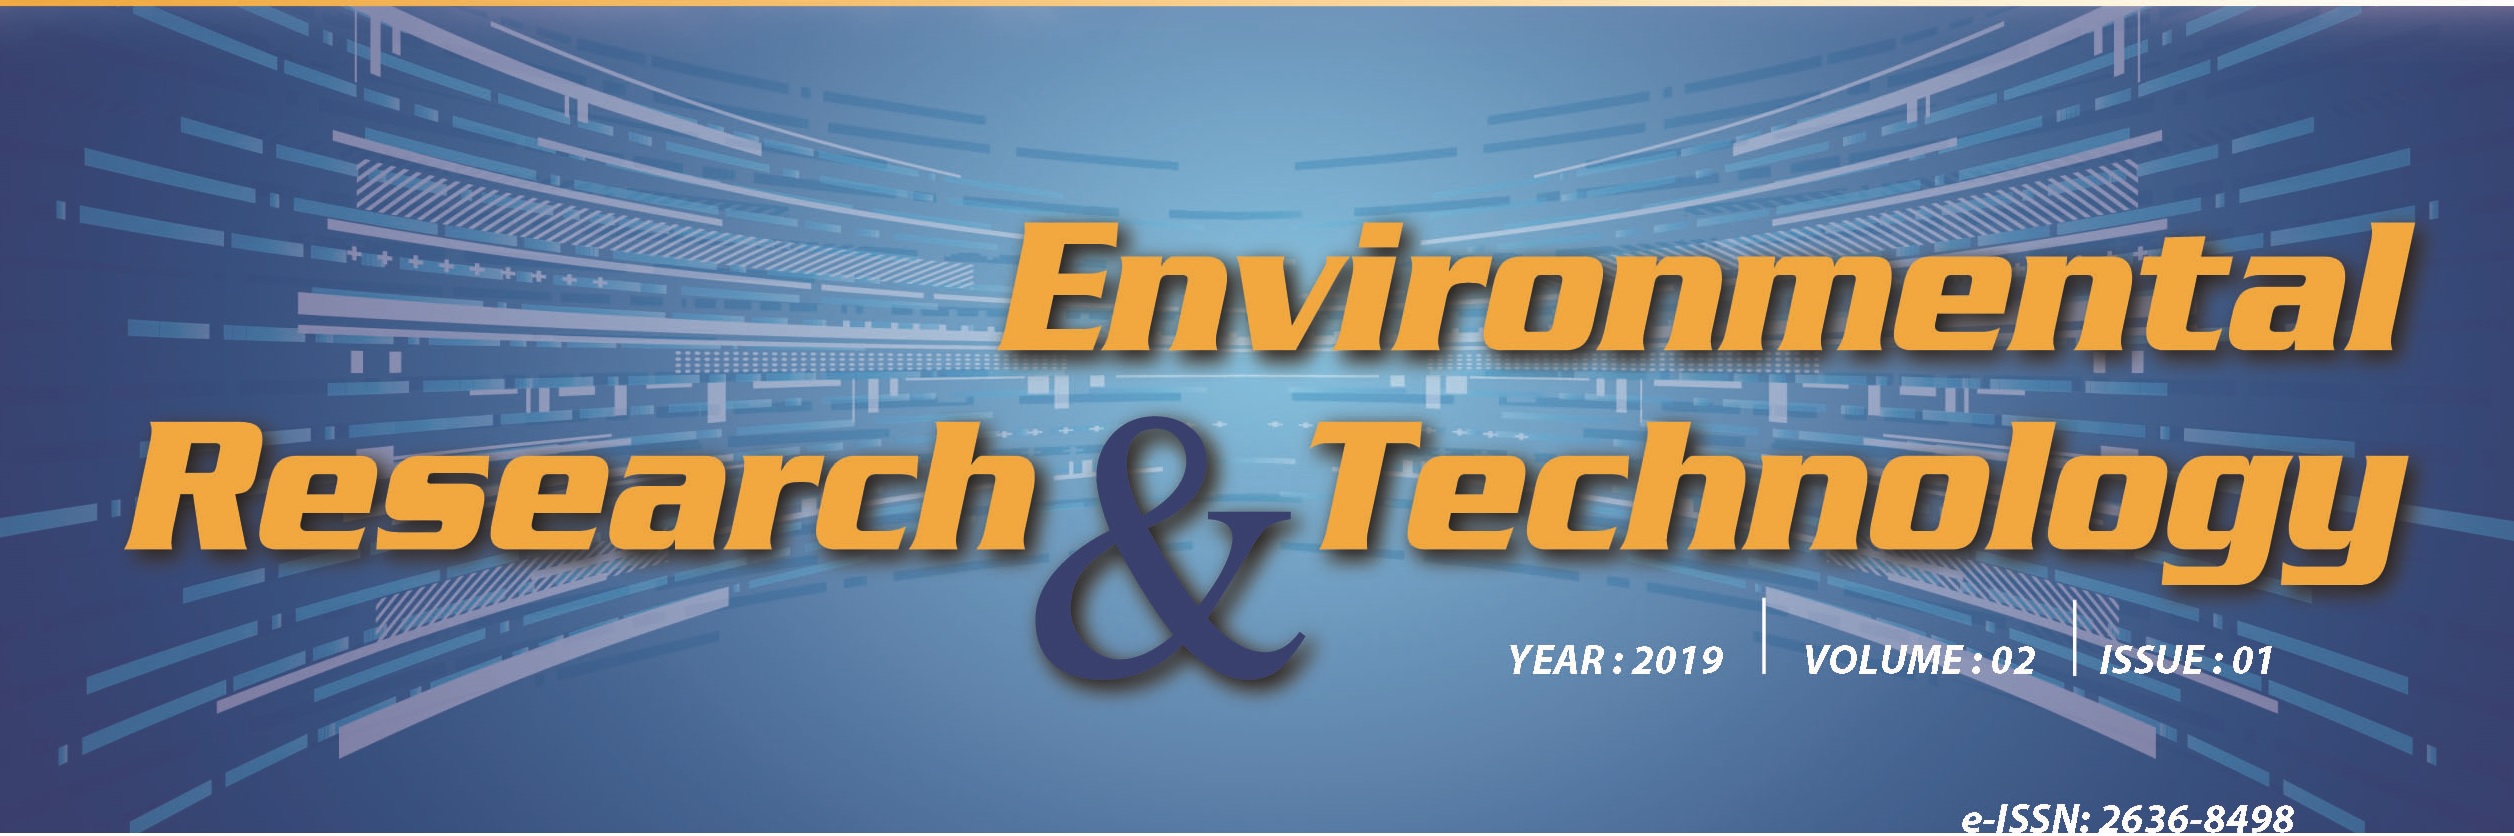 Environmental Research & Technology